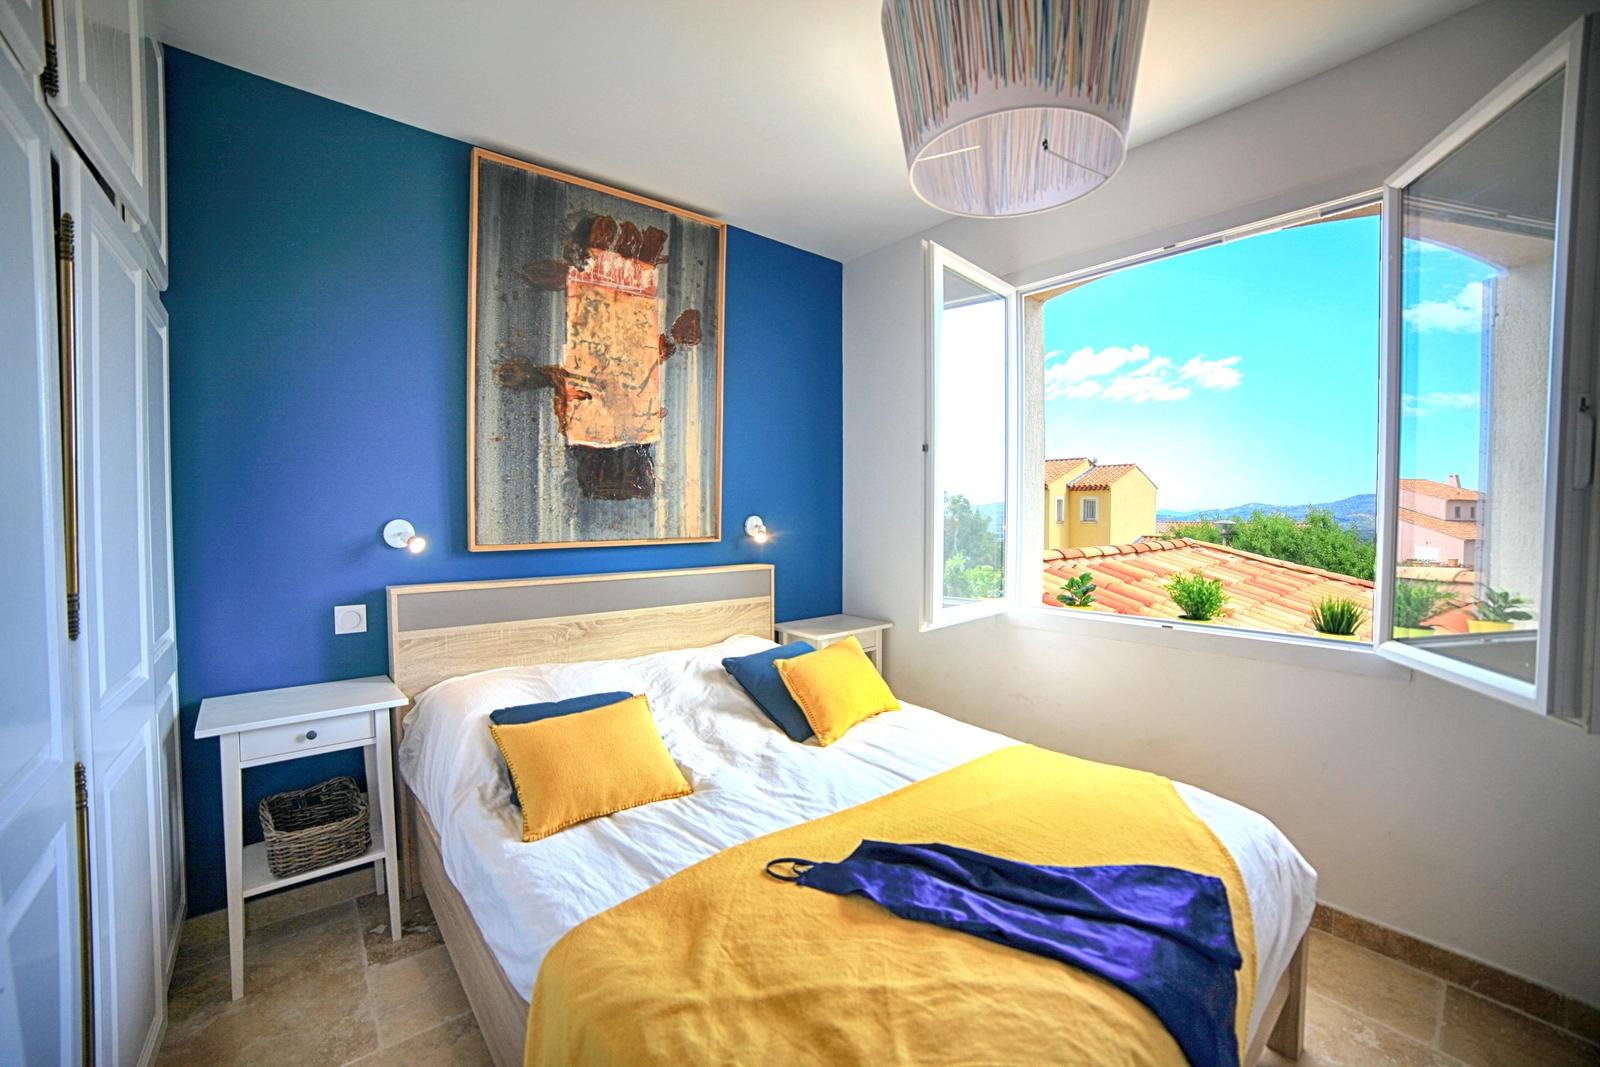 Bedroom in spacious designer villa in provence - 5